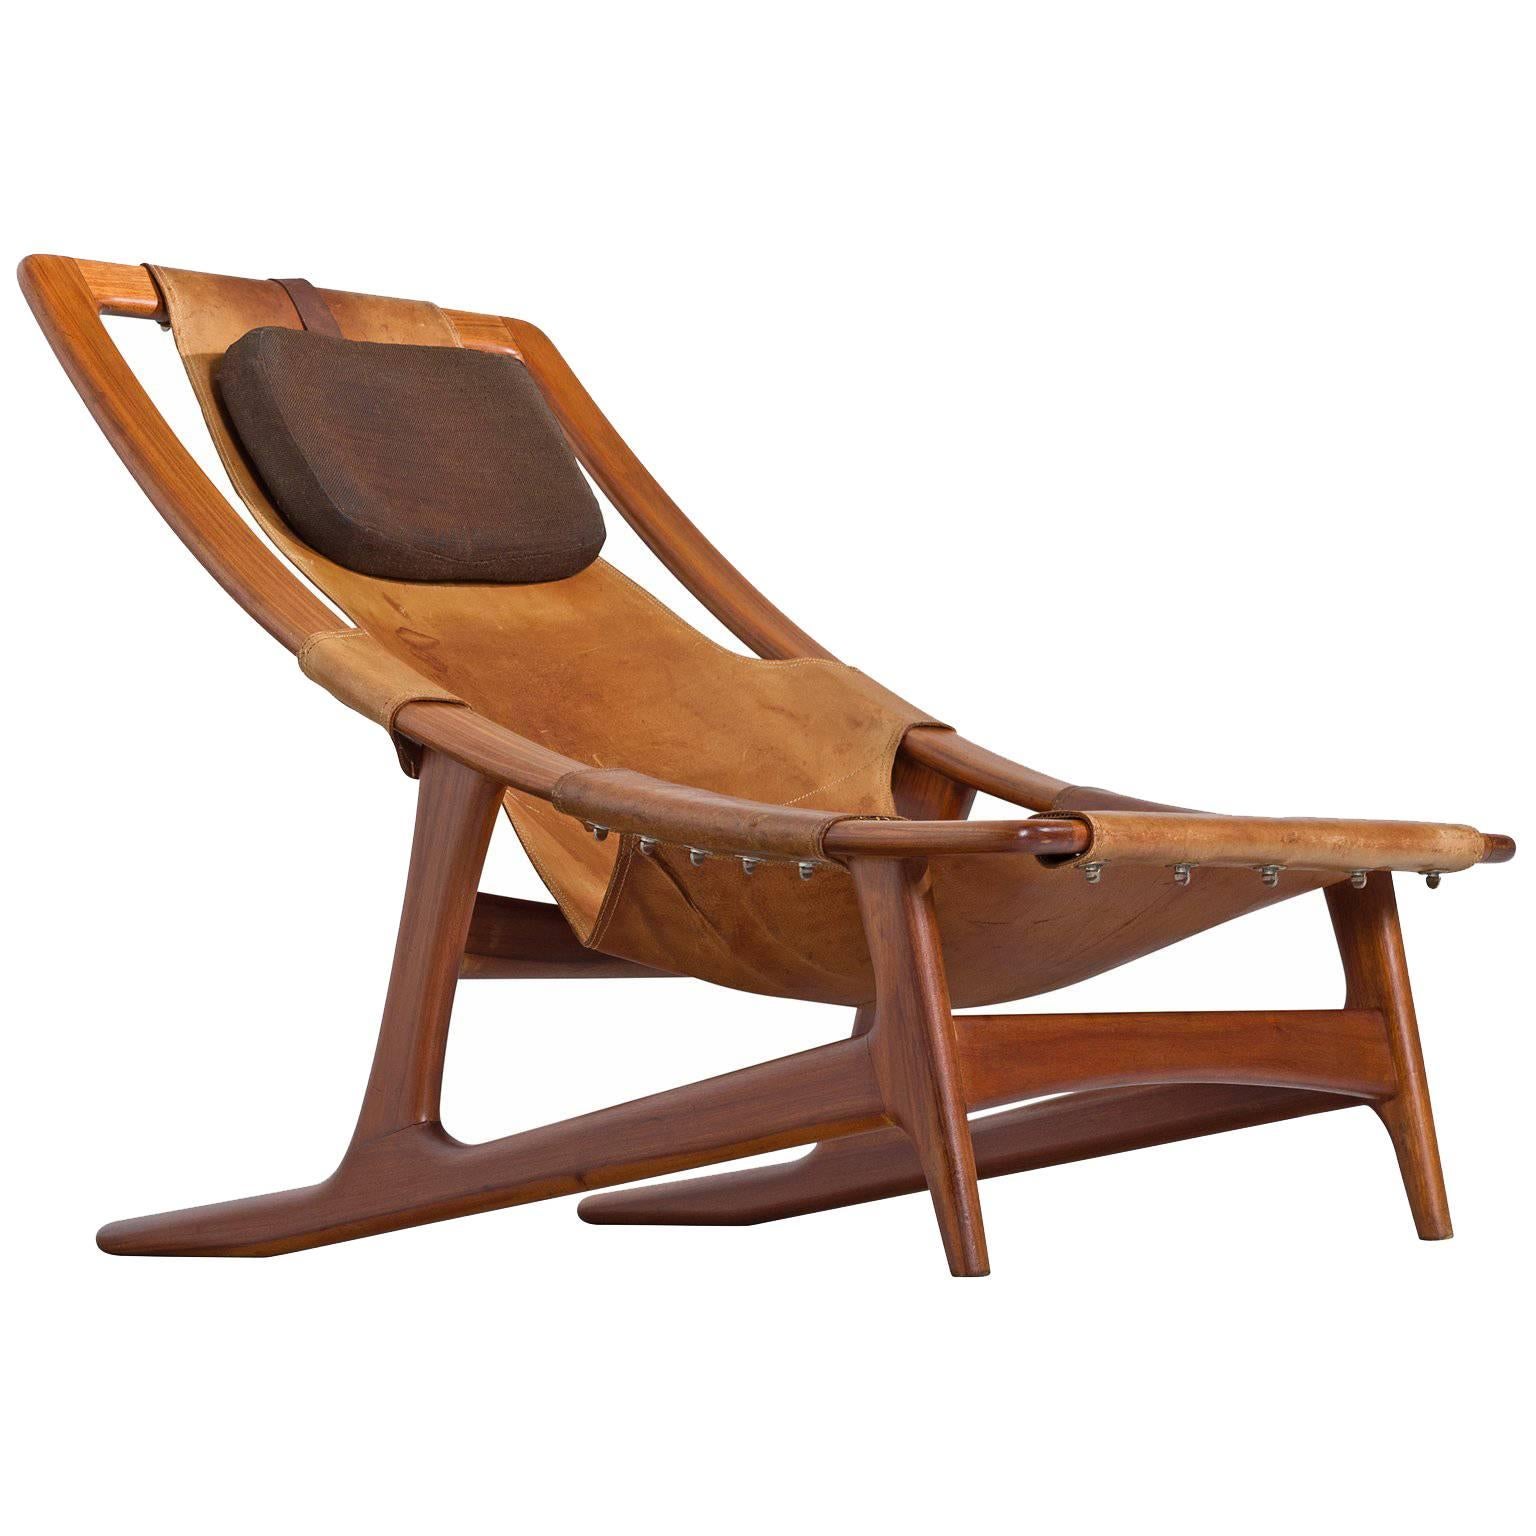 Arne Tidemand Ruud 'Holmkollen' Lounge Chair for Norcraft